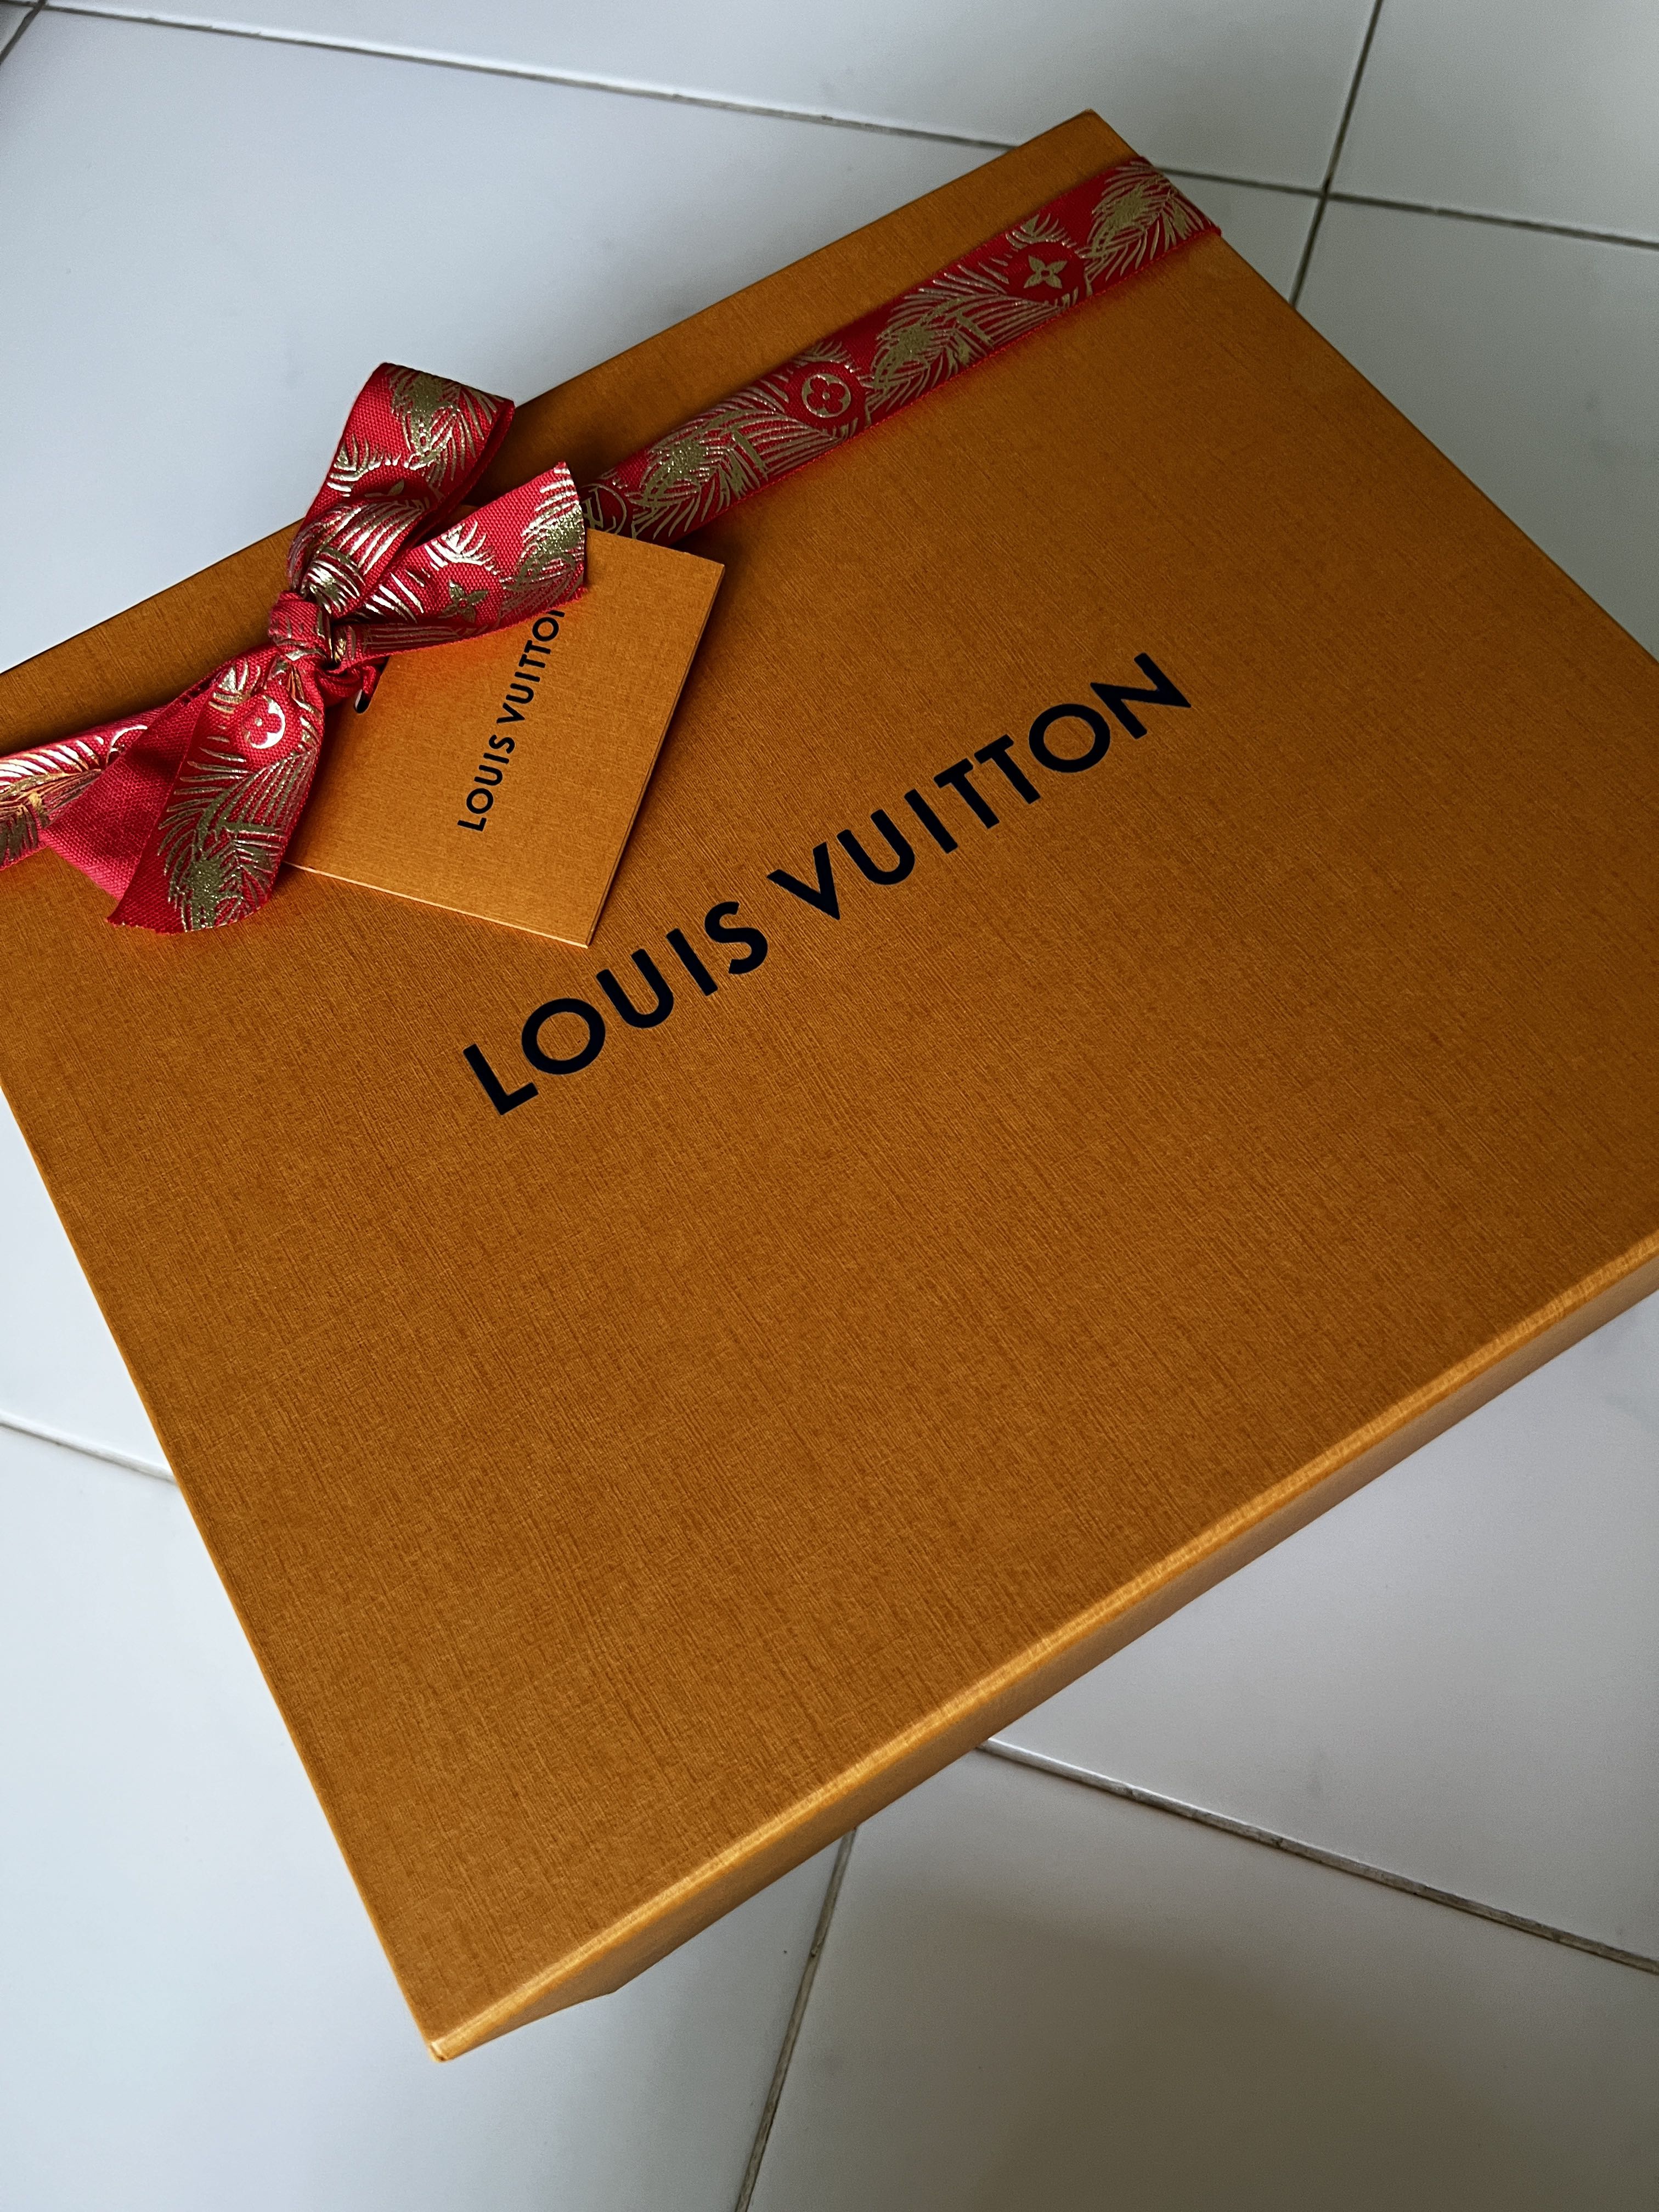 Louis Vuitton gift box